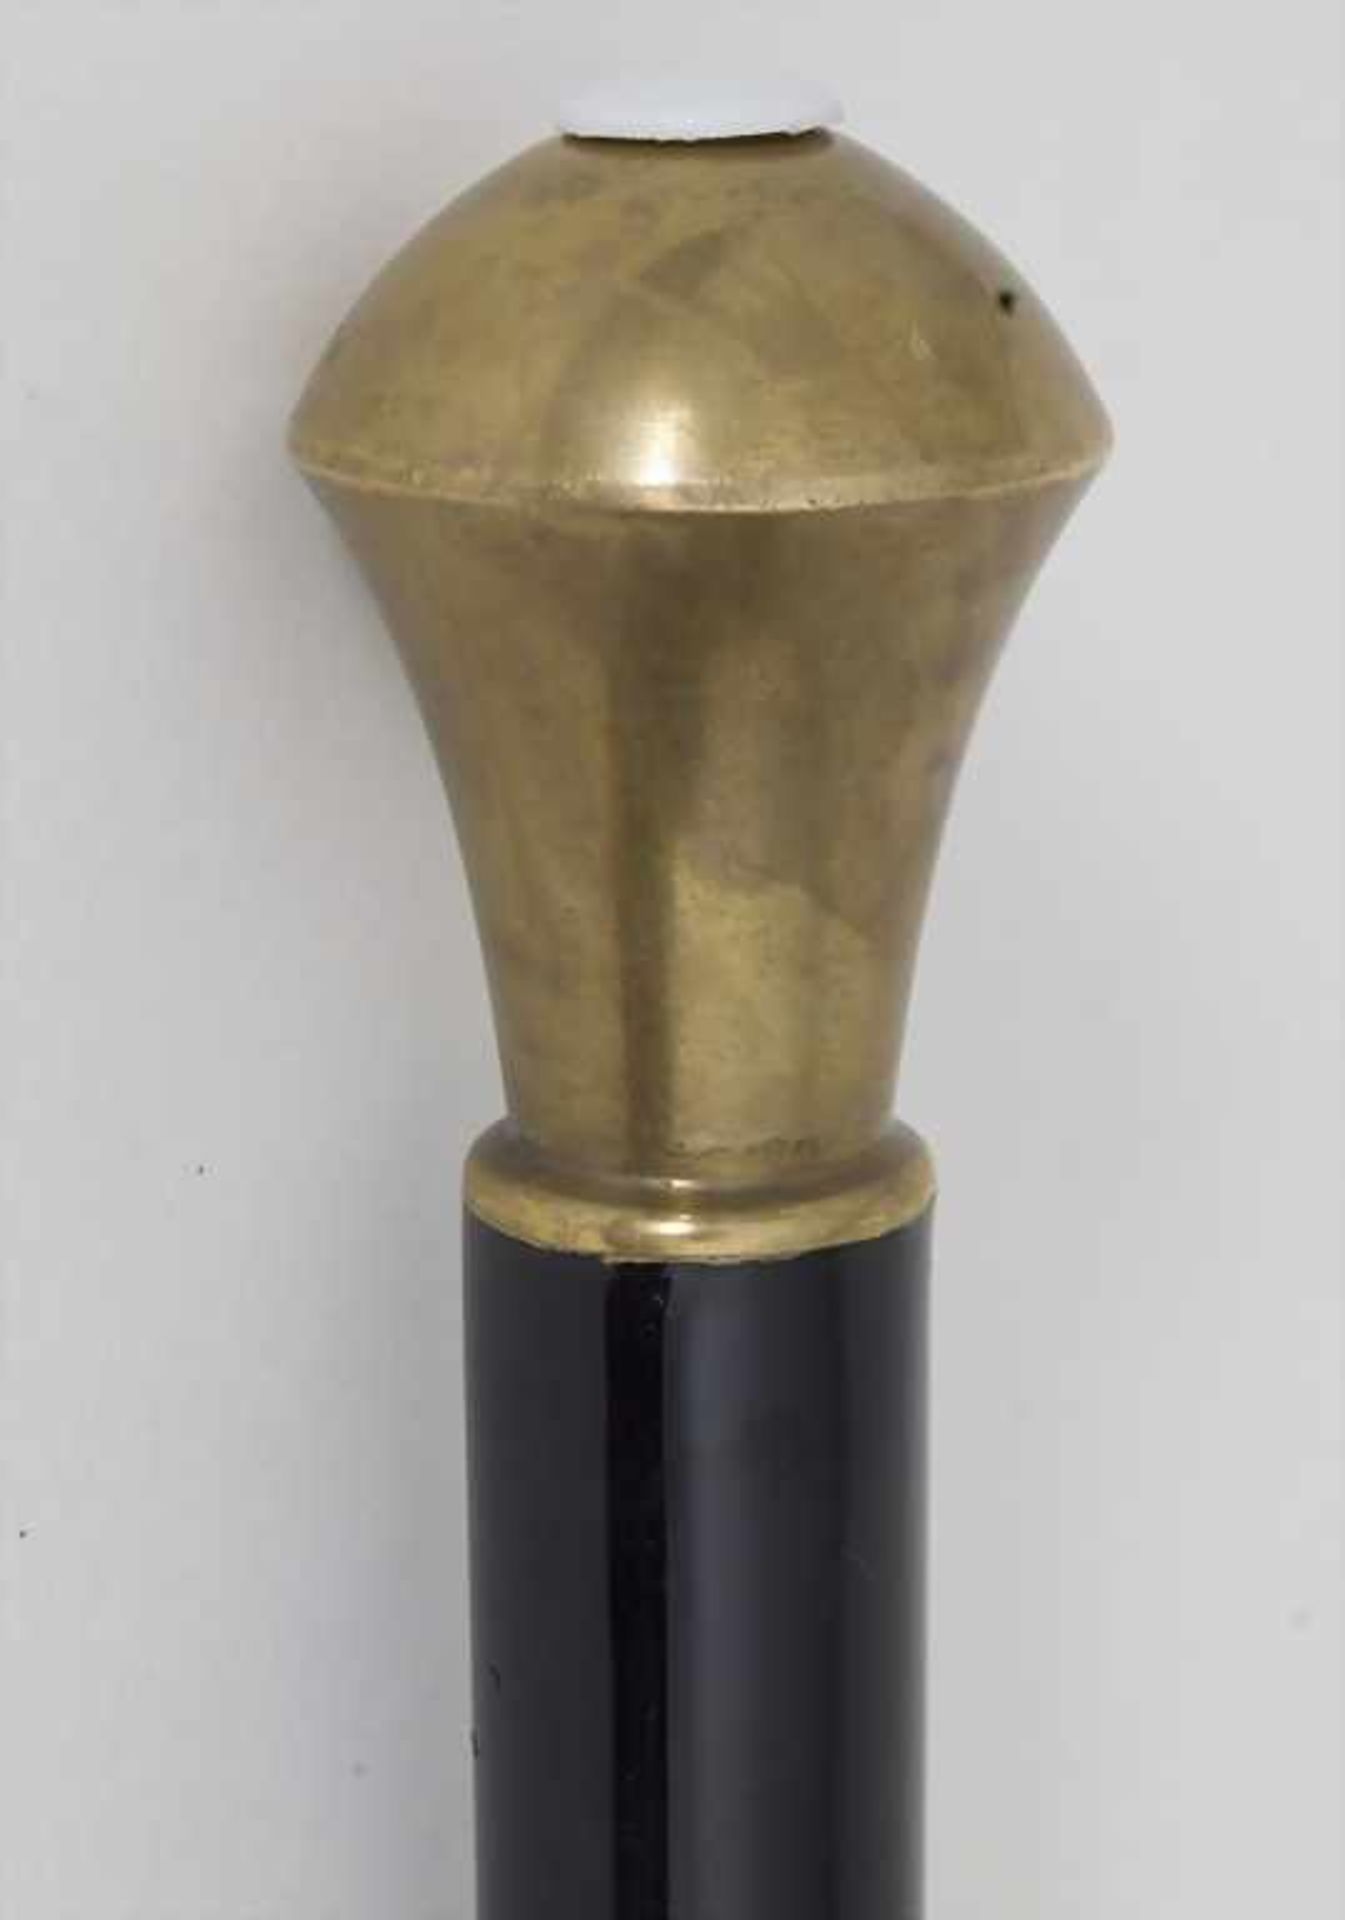 Gehstock mit Messingknauf / A cane with brass knob, um 1900Material: Ebenholz, Messingknauf,